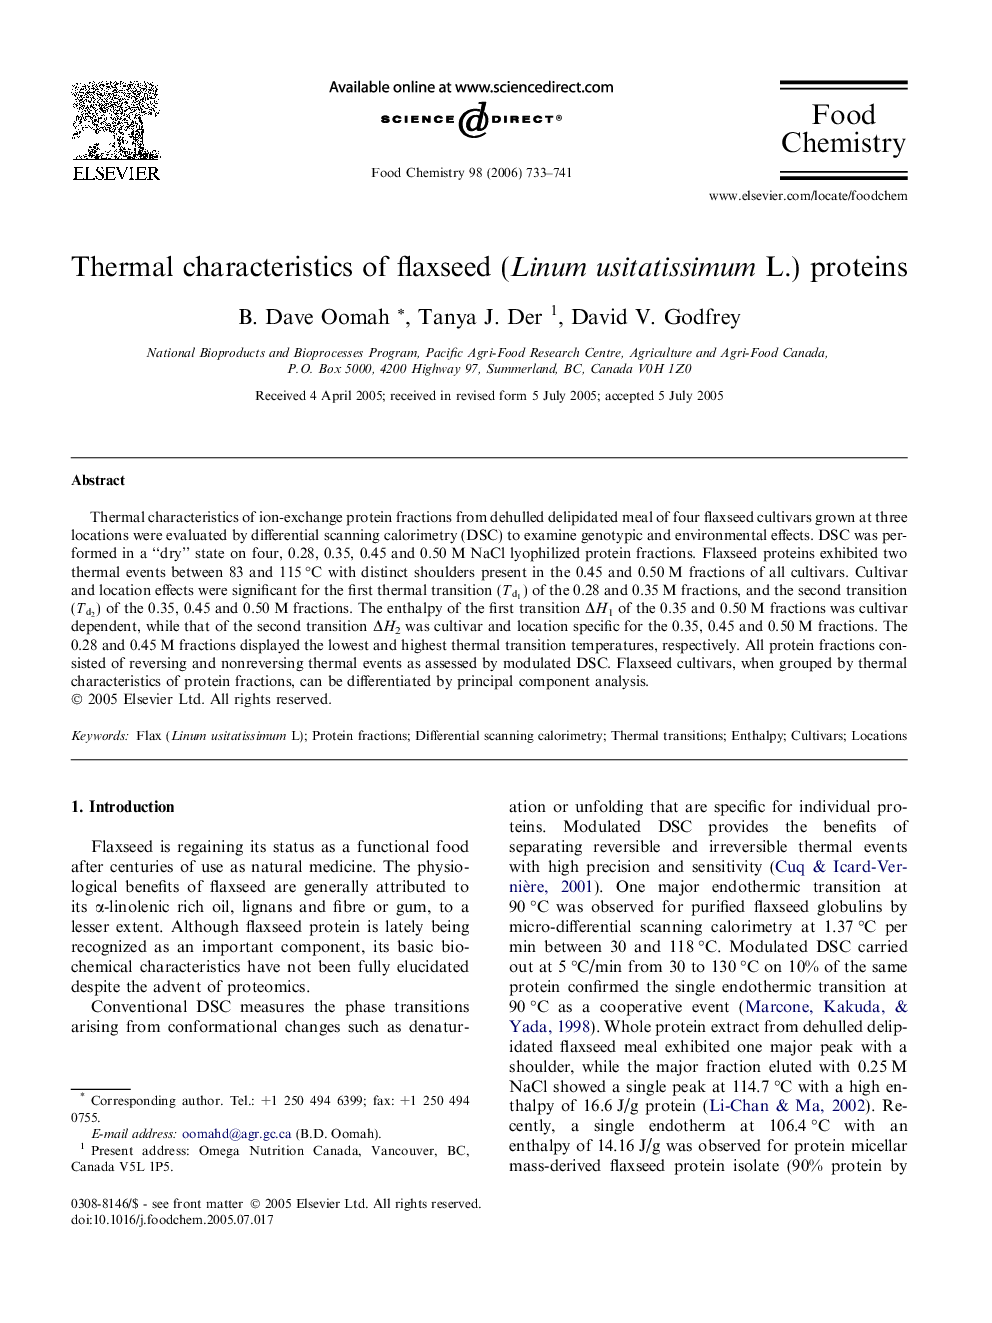 Thermal characteristics of flaxseed (Linum usitatissimum L.) proteins